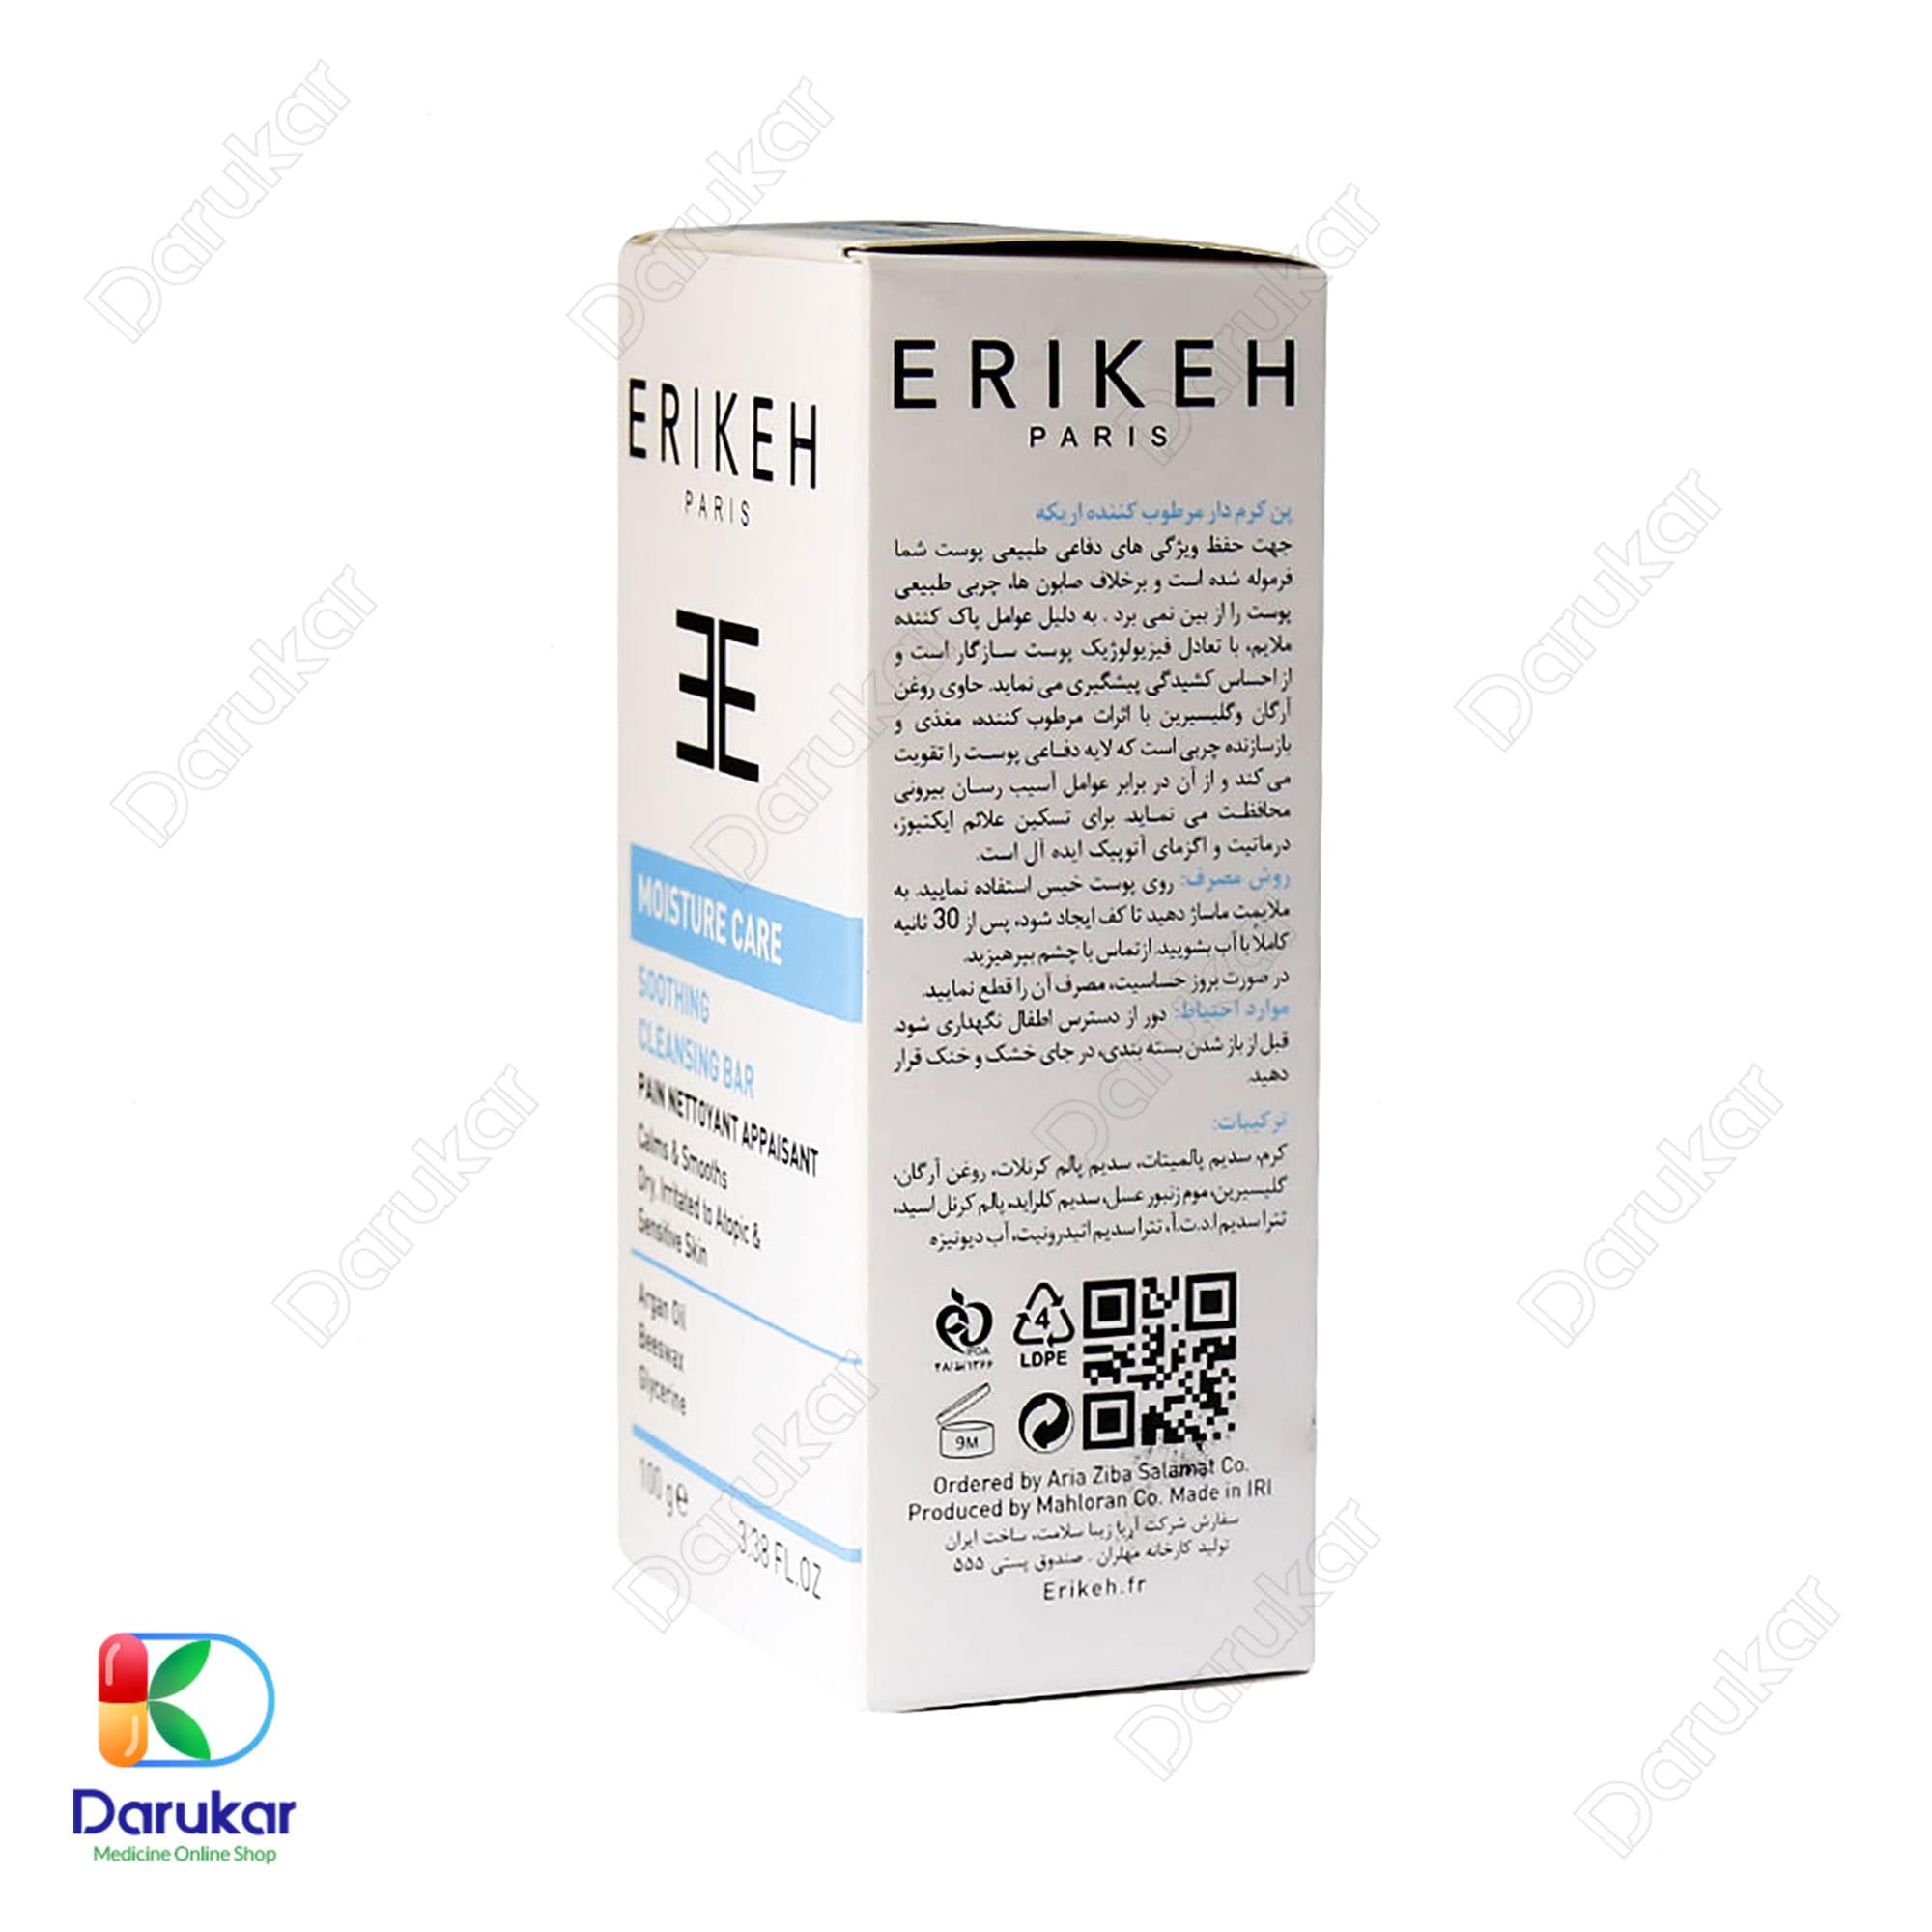 Erikeh Skin Conditioner Pain 100 gr 1